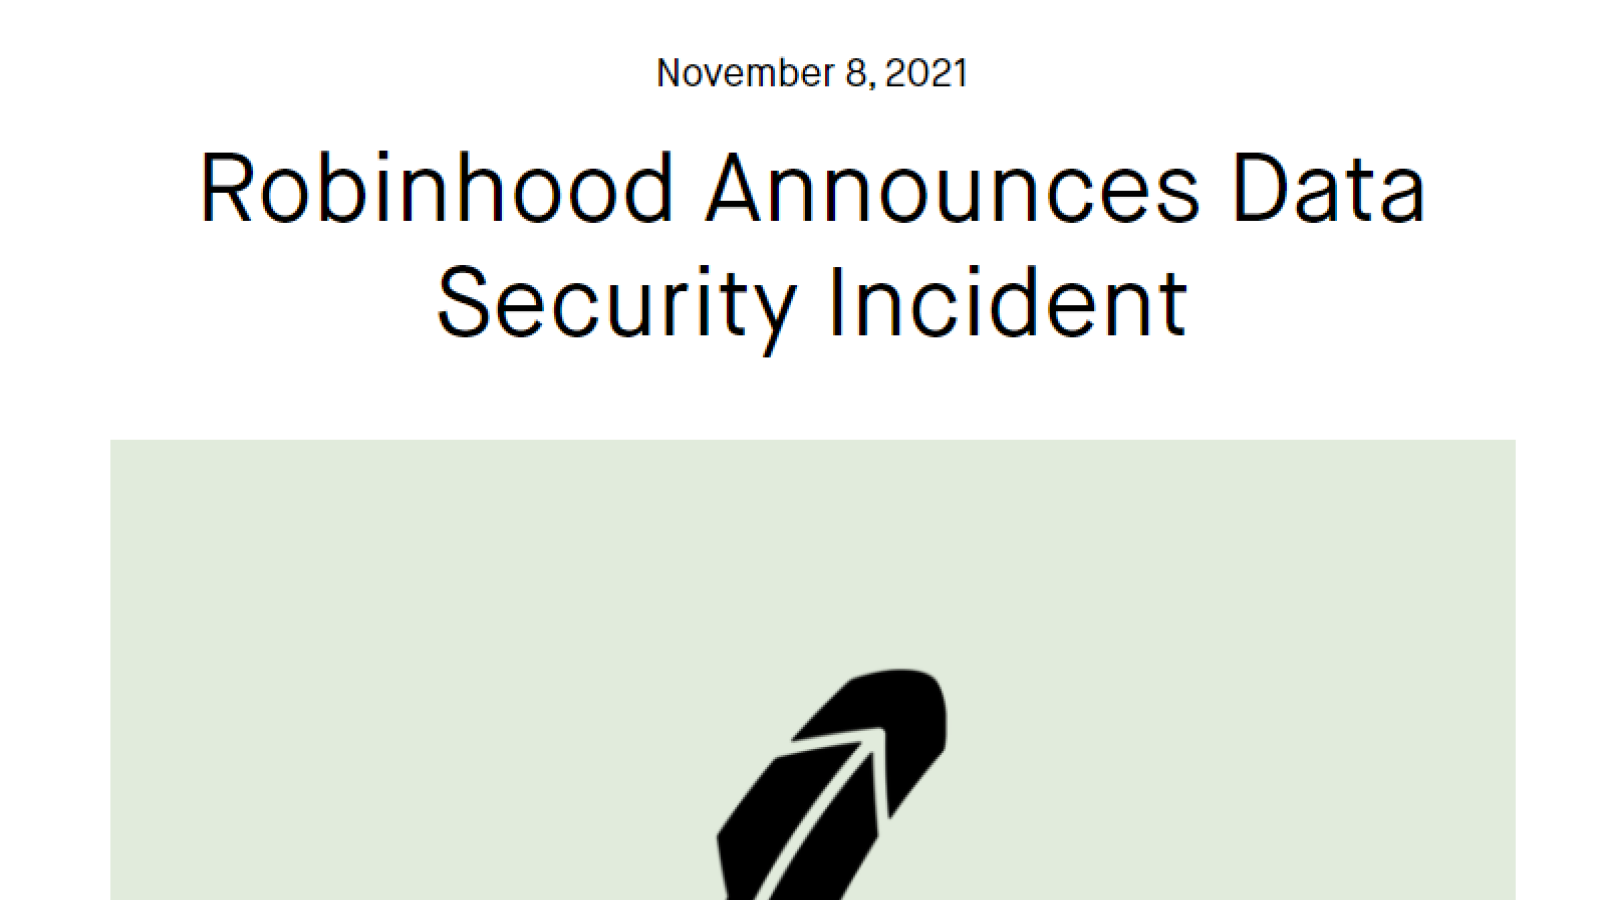 Robinhood post announcing recent cyberattack